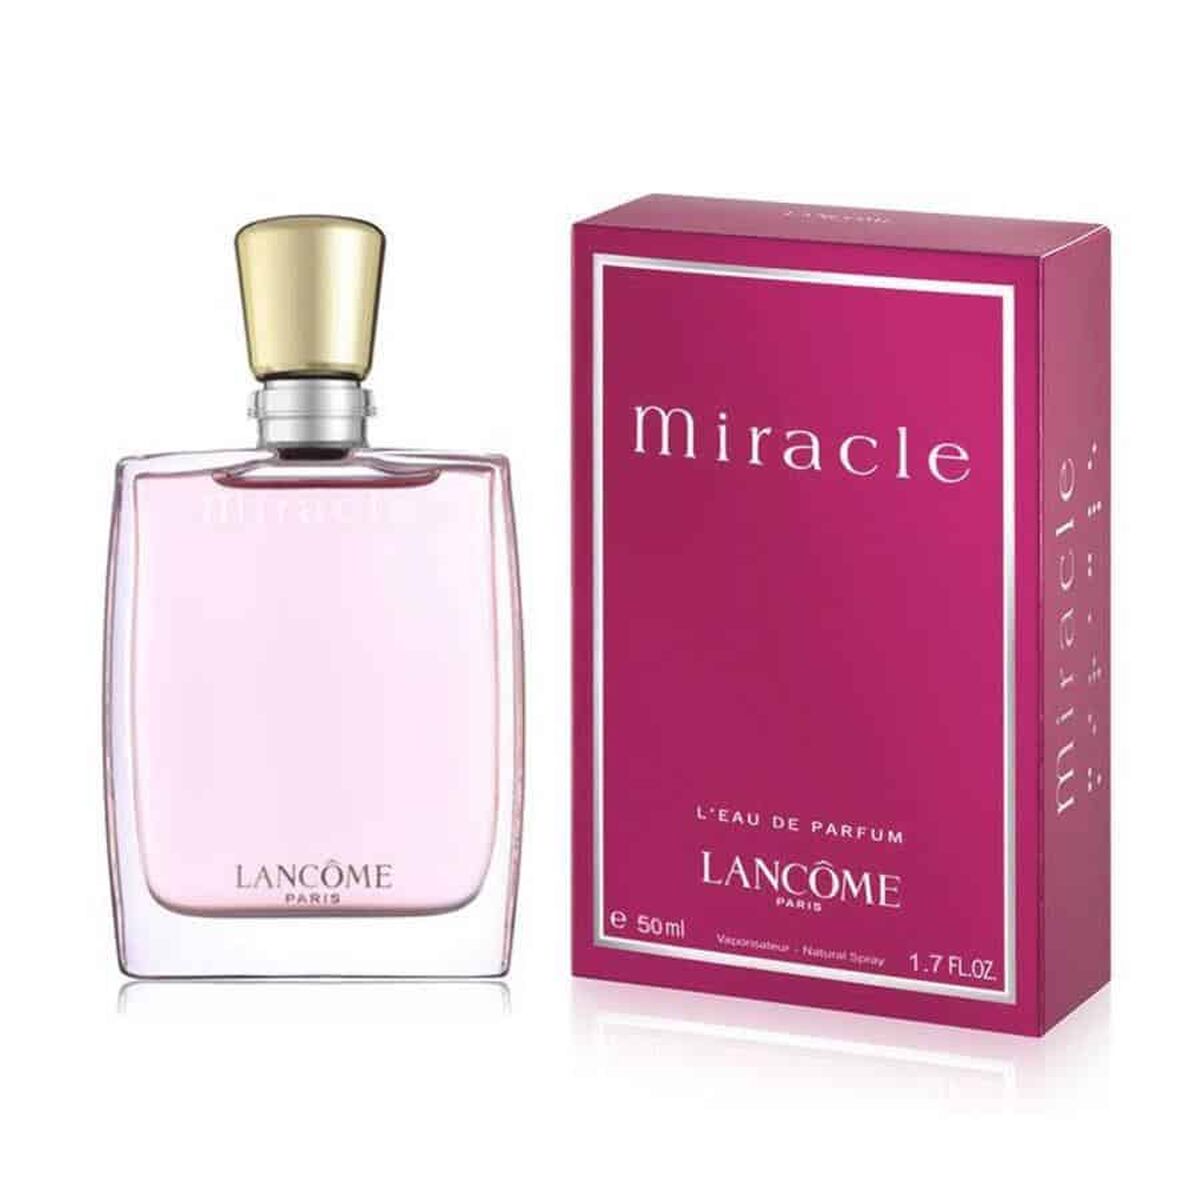 Parfum de femmes miracle lancôme miracle edp edp